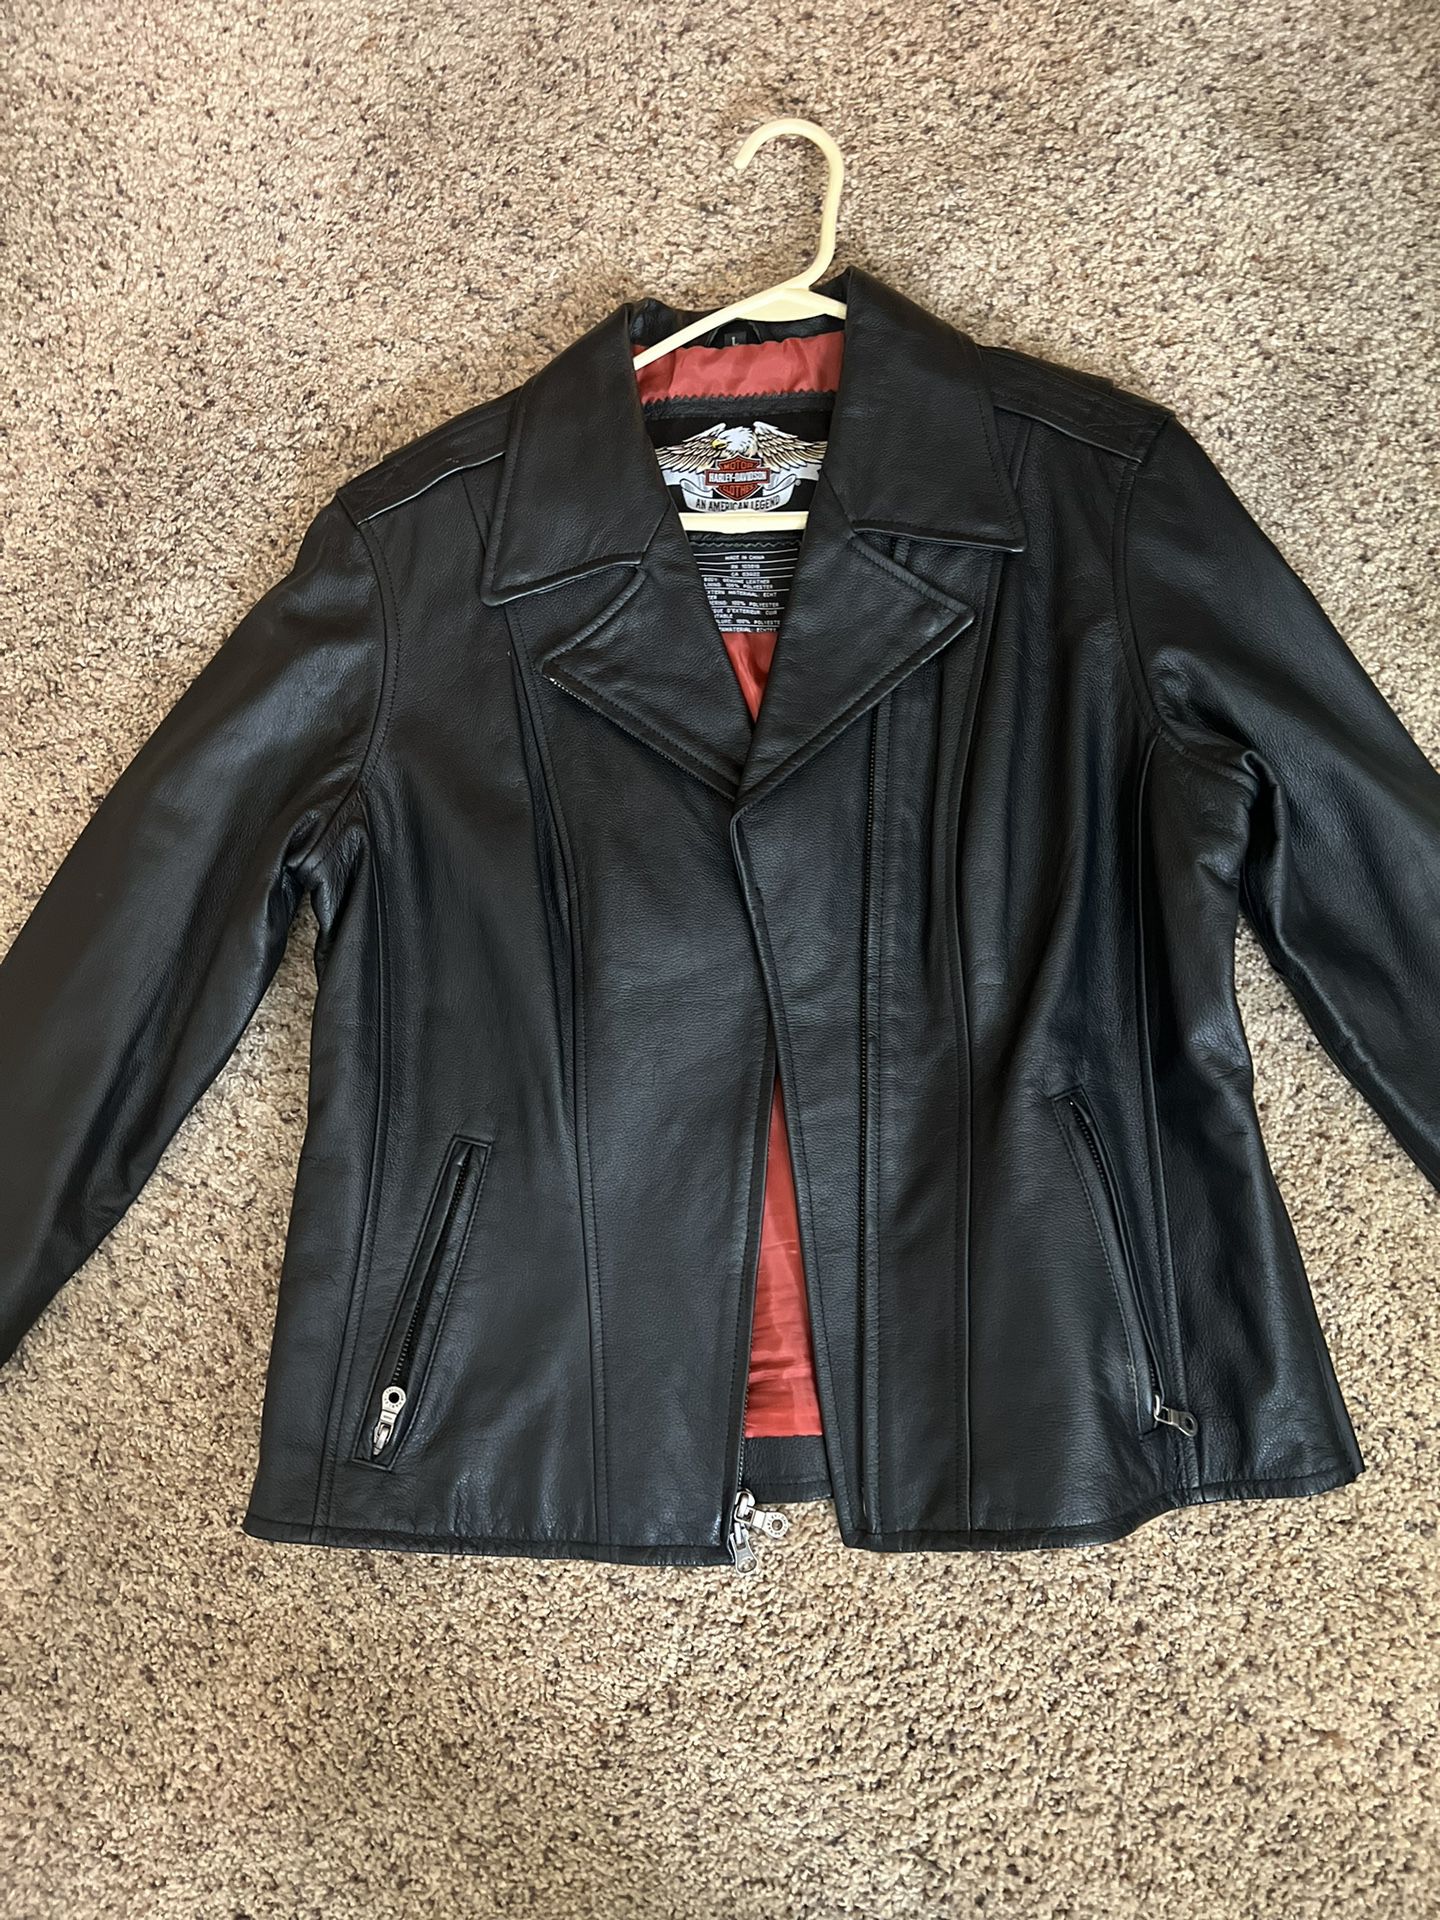 Harley Davidson, Women’s Leather Jacket, Helmet, Chaps